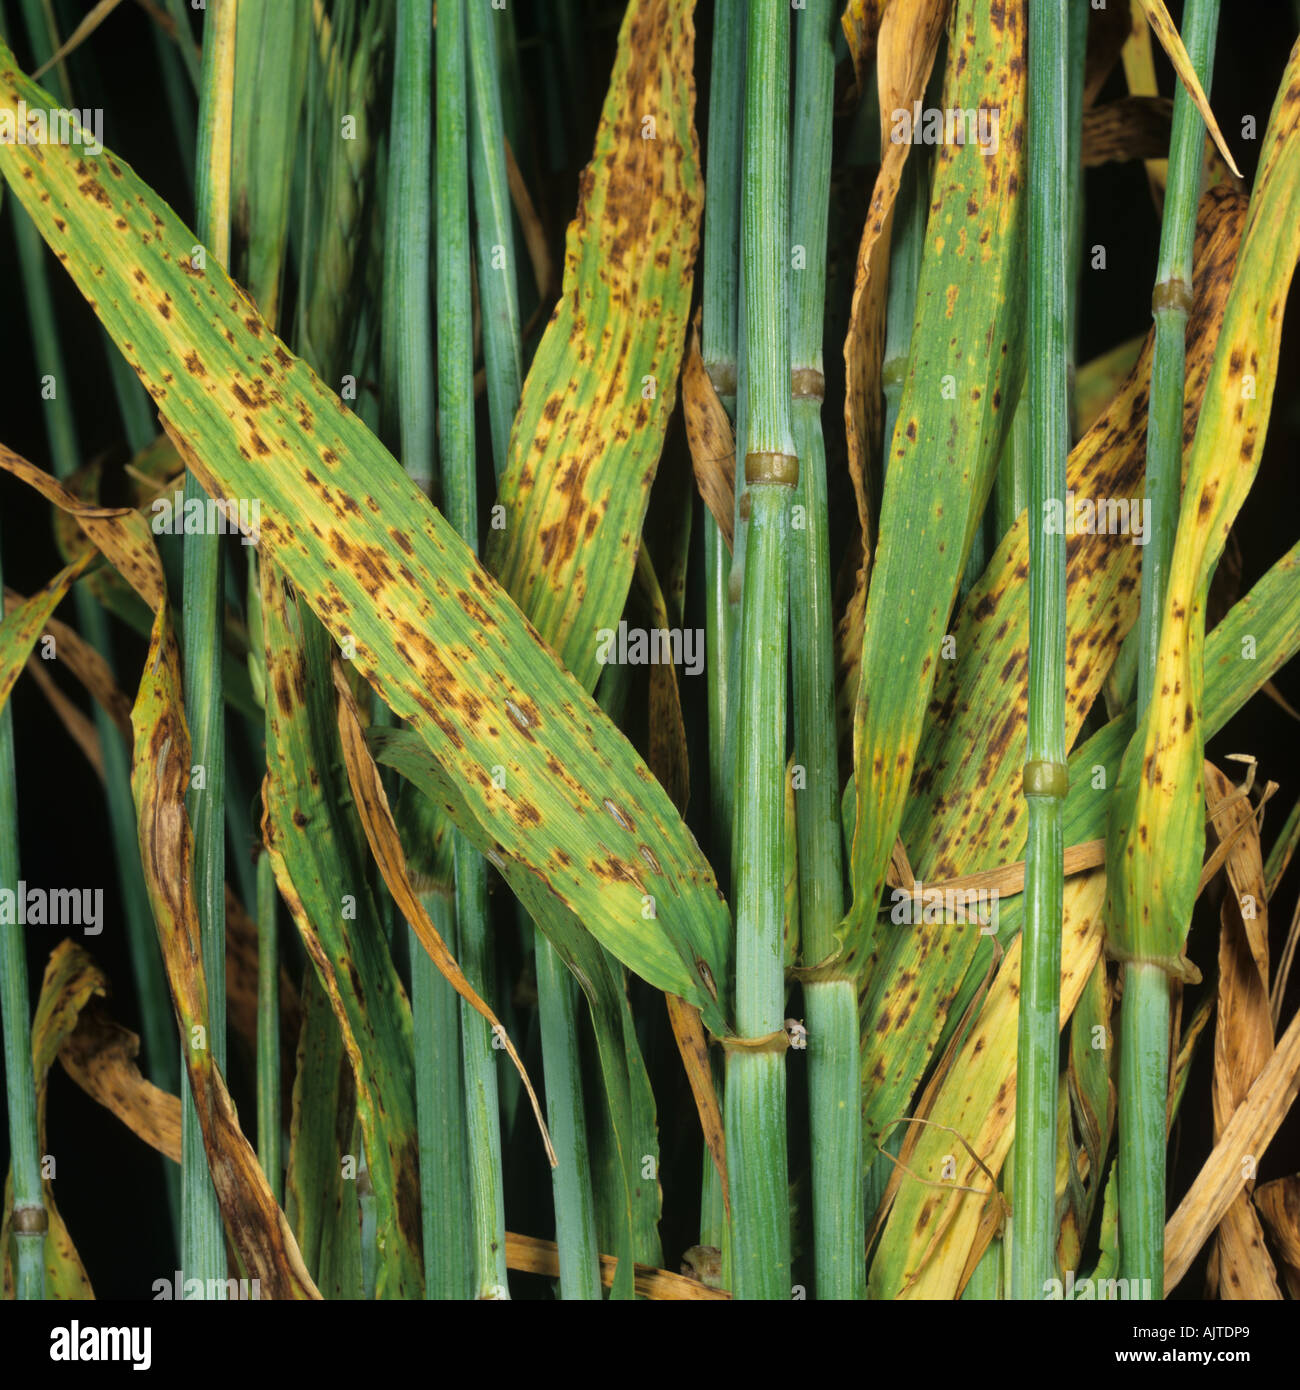 Barley spot Ramularia collo cygni leaf spotting on barley Stock Photo